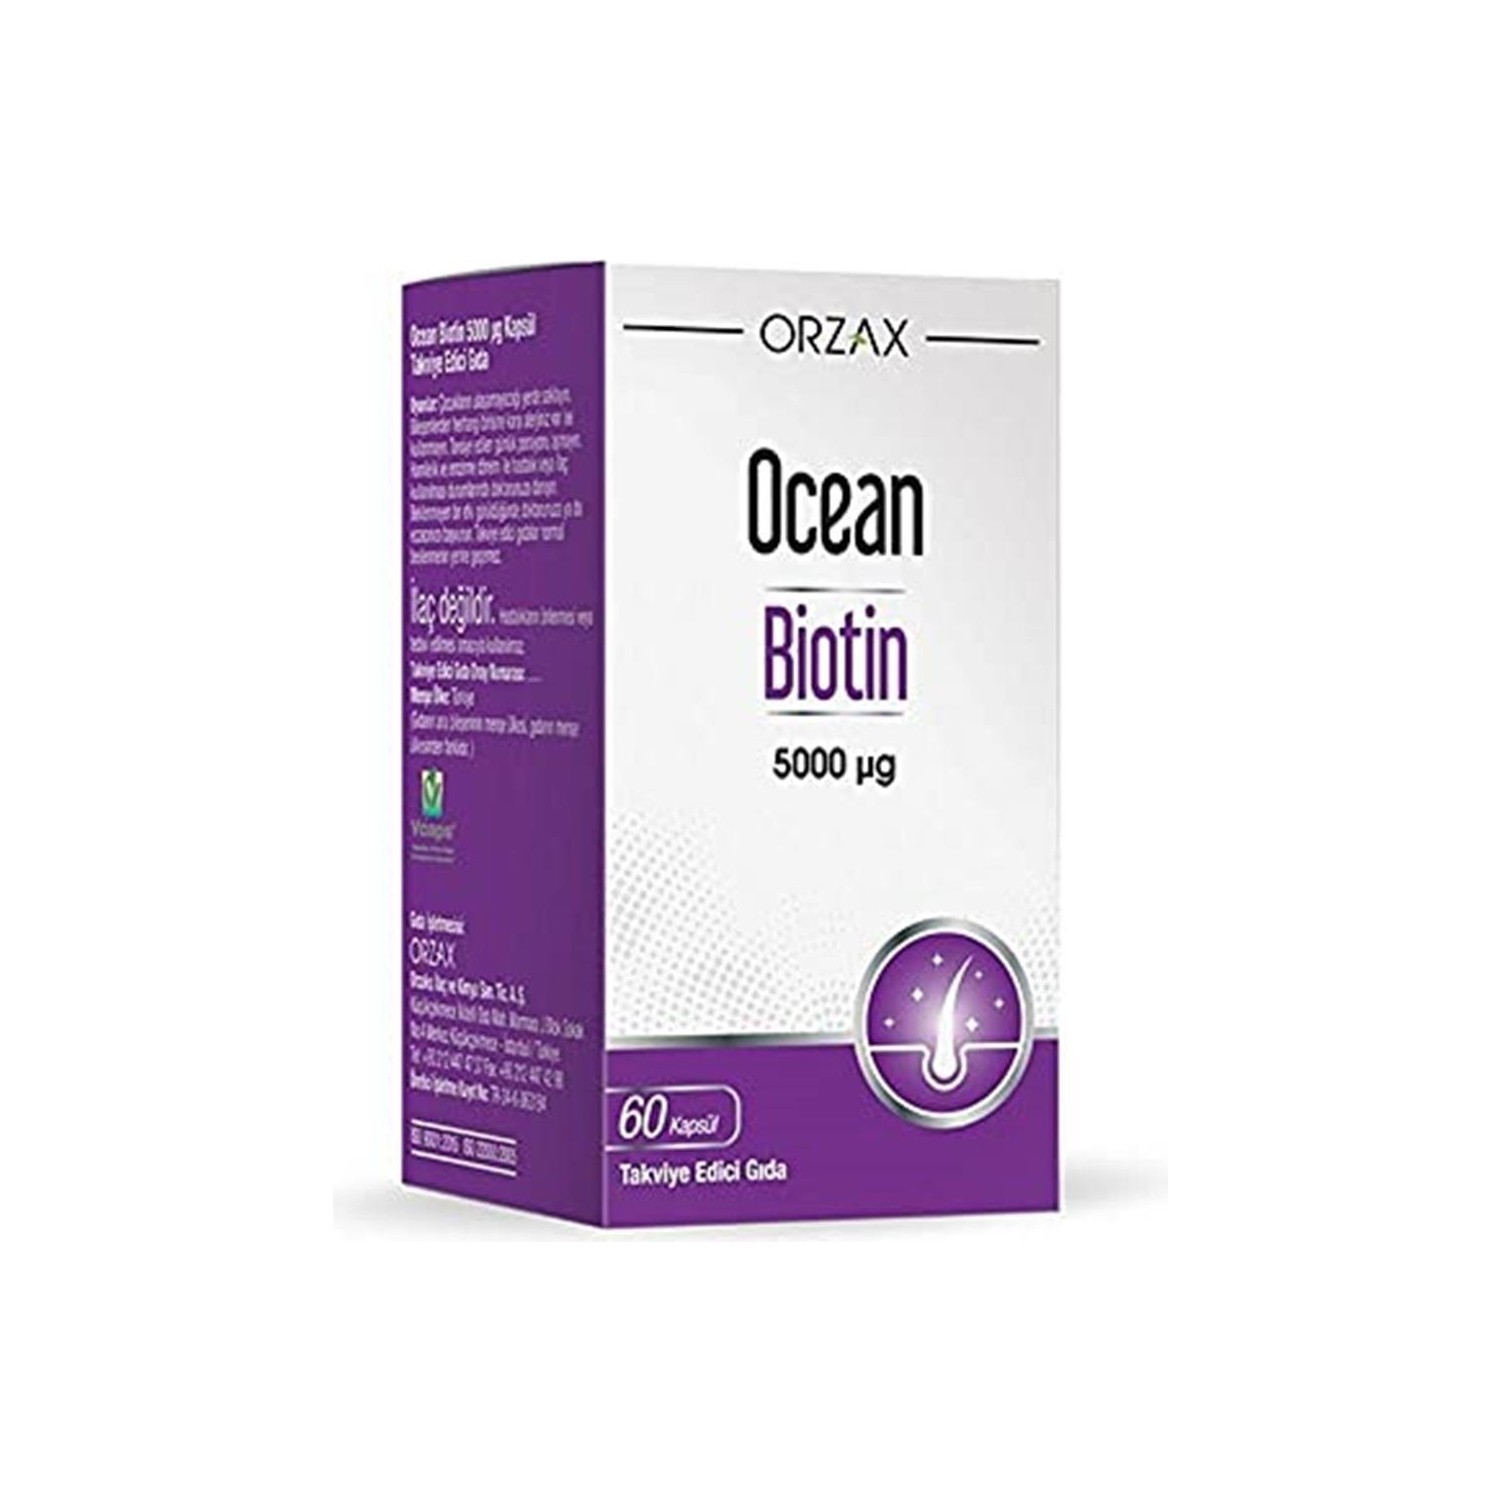 Пищевая добавка Ocean Biotin, 60 капсул 5000 мкг.